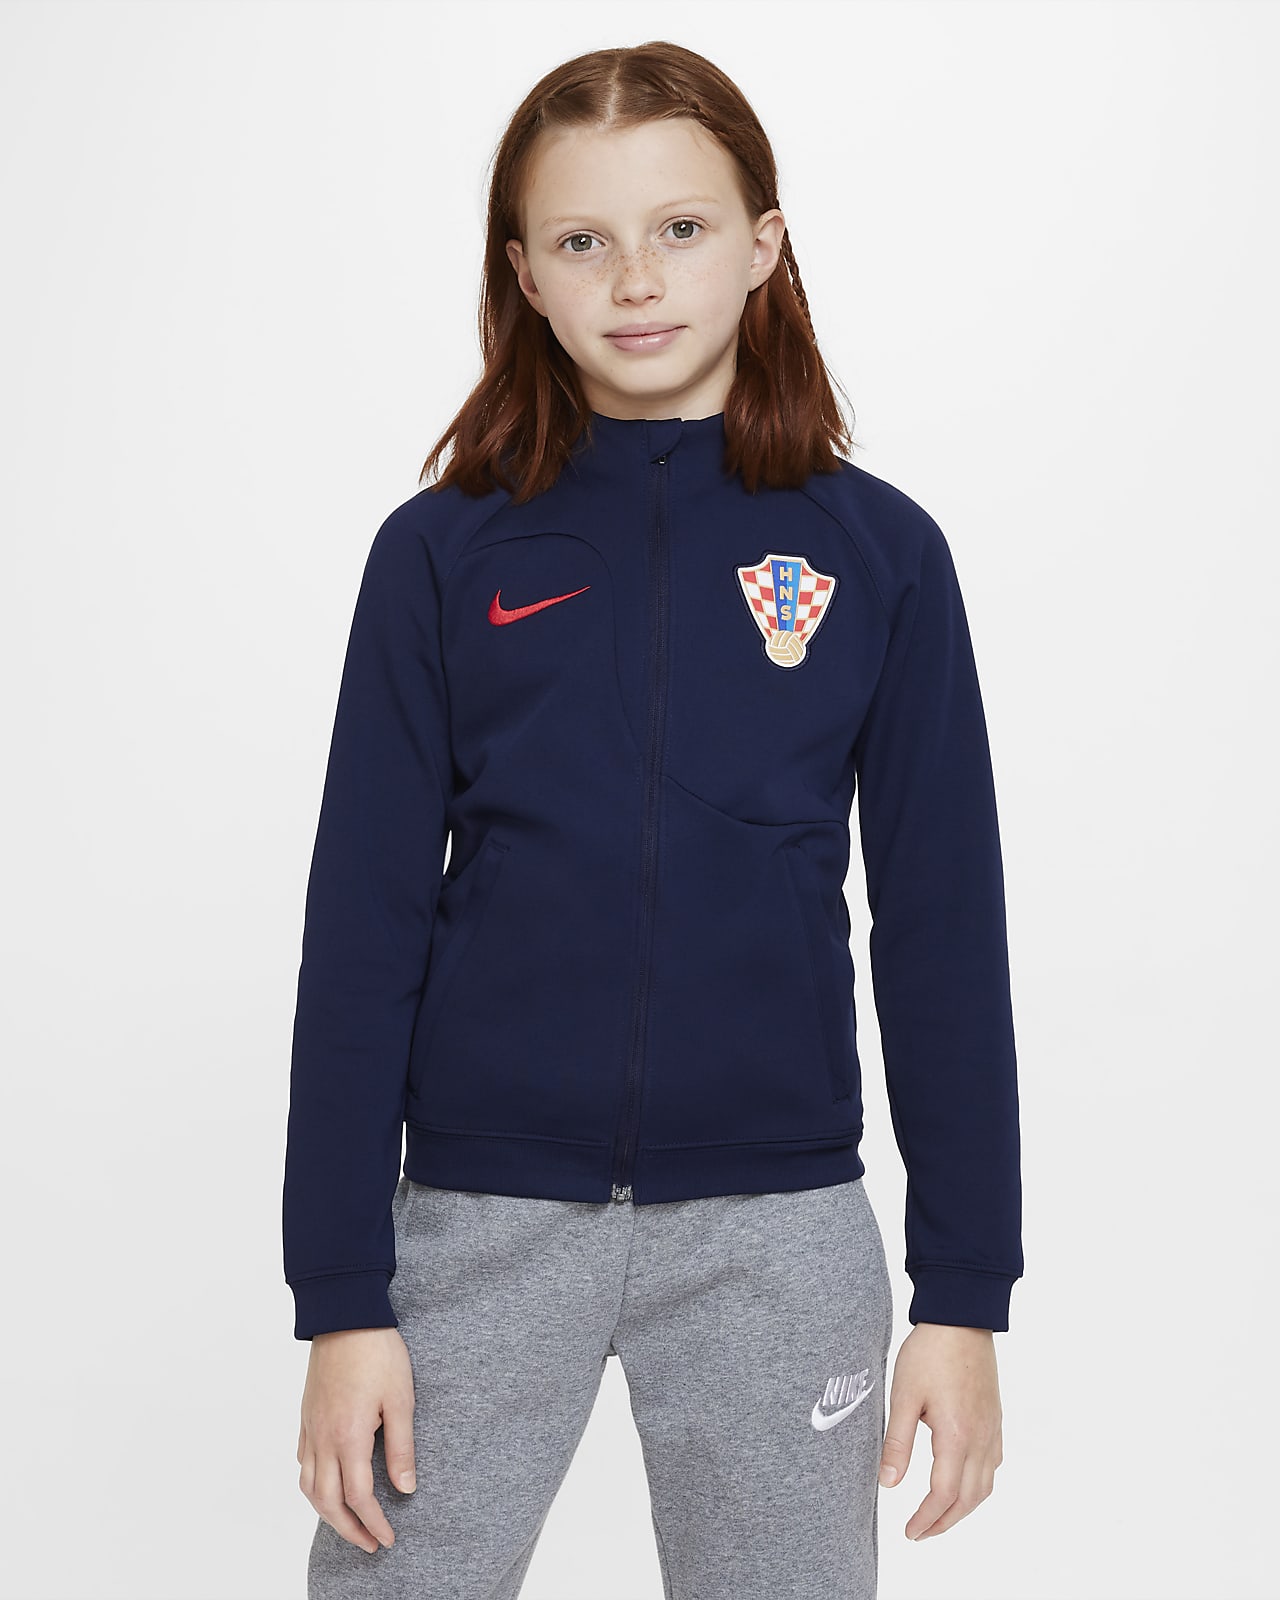 Croatia Academy Older Kids' Nike Football Jacket. LU